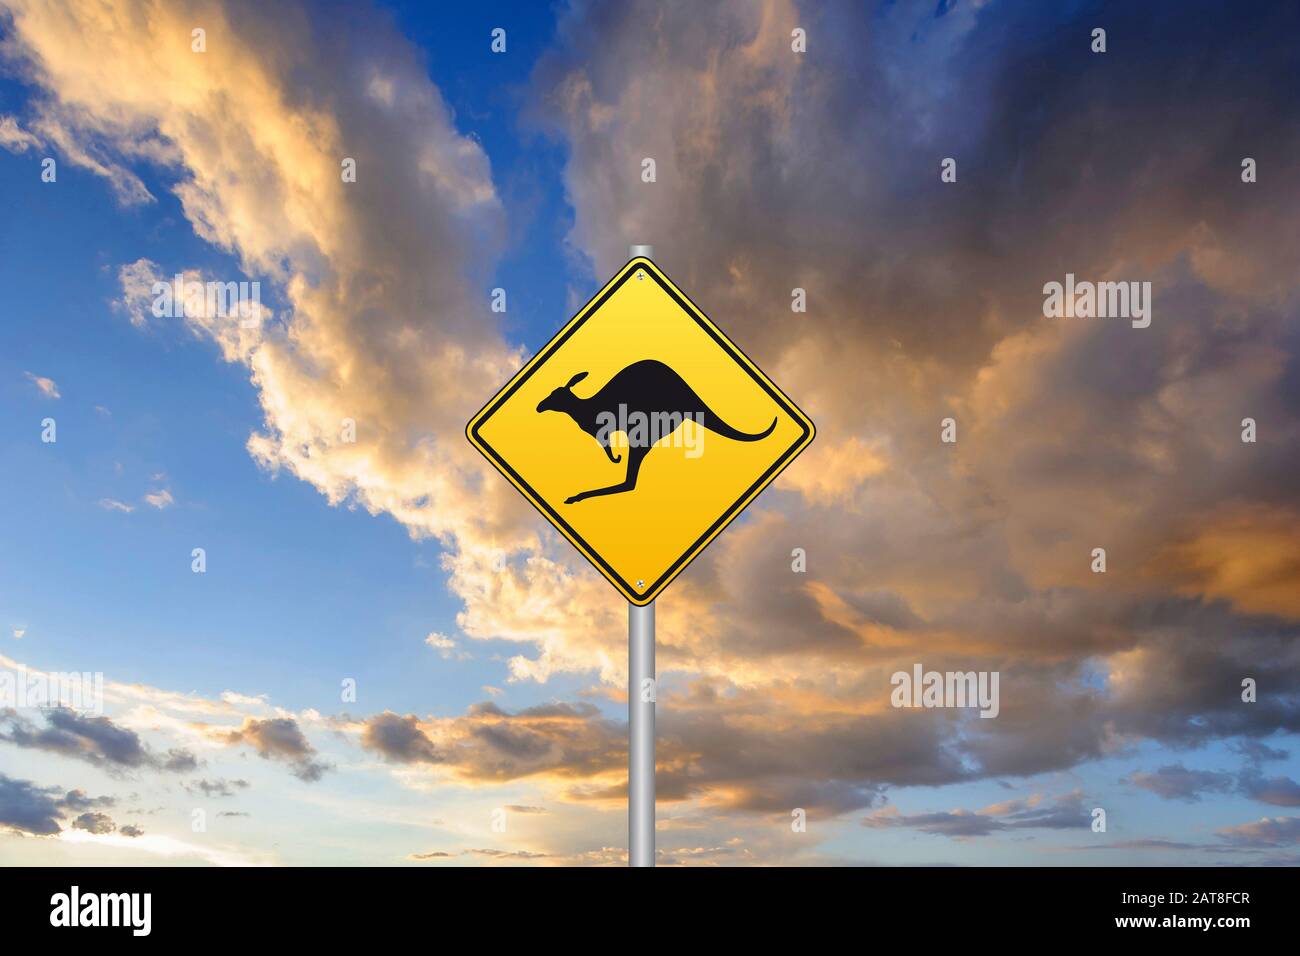 road sign warning against kangaroos, Australia Stock Photo